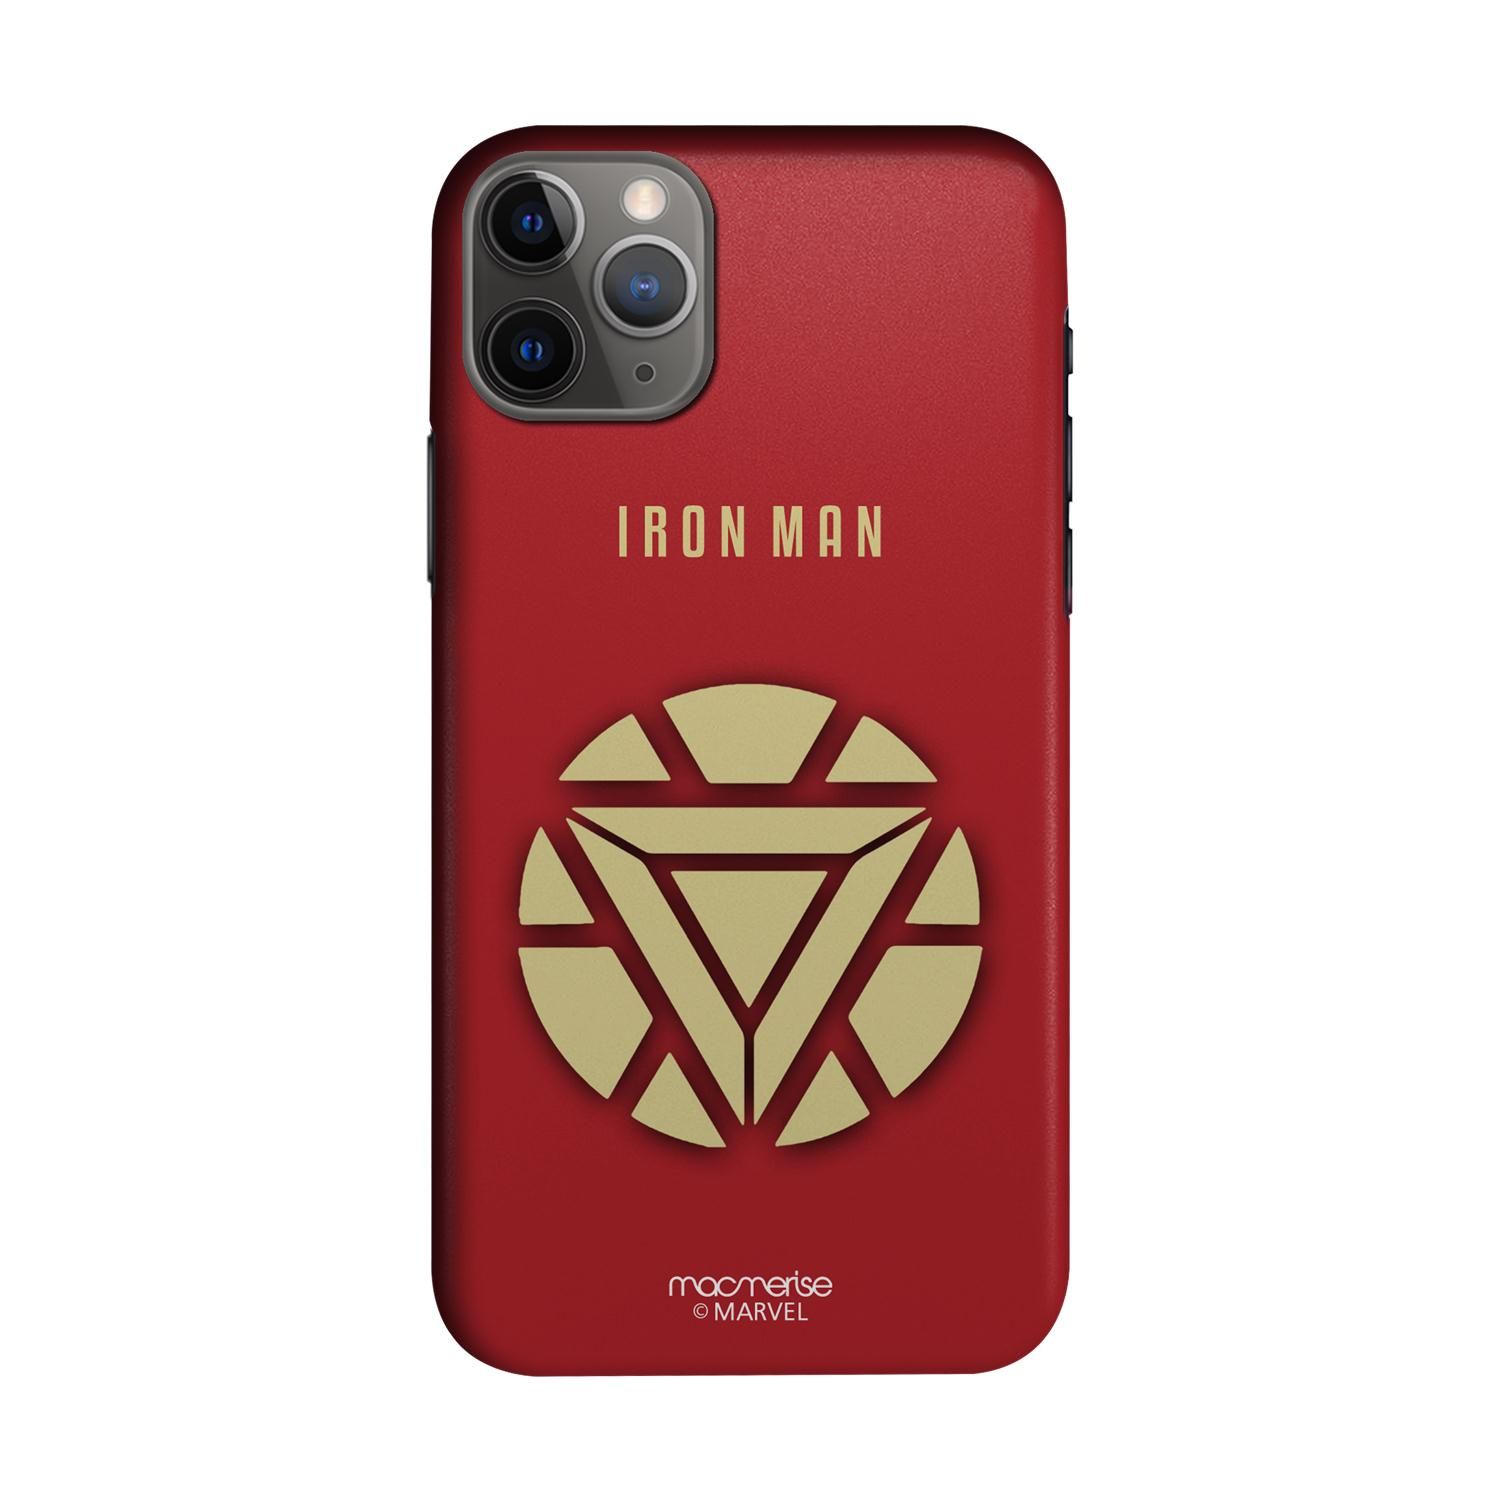 Buy Minimalistic Ironman - Sleek Phone Case for iPhone 11 Pro Online